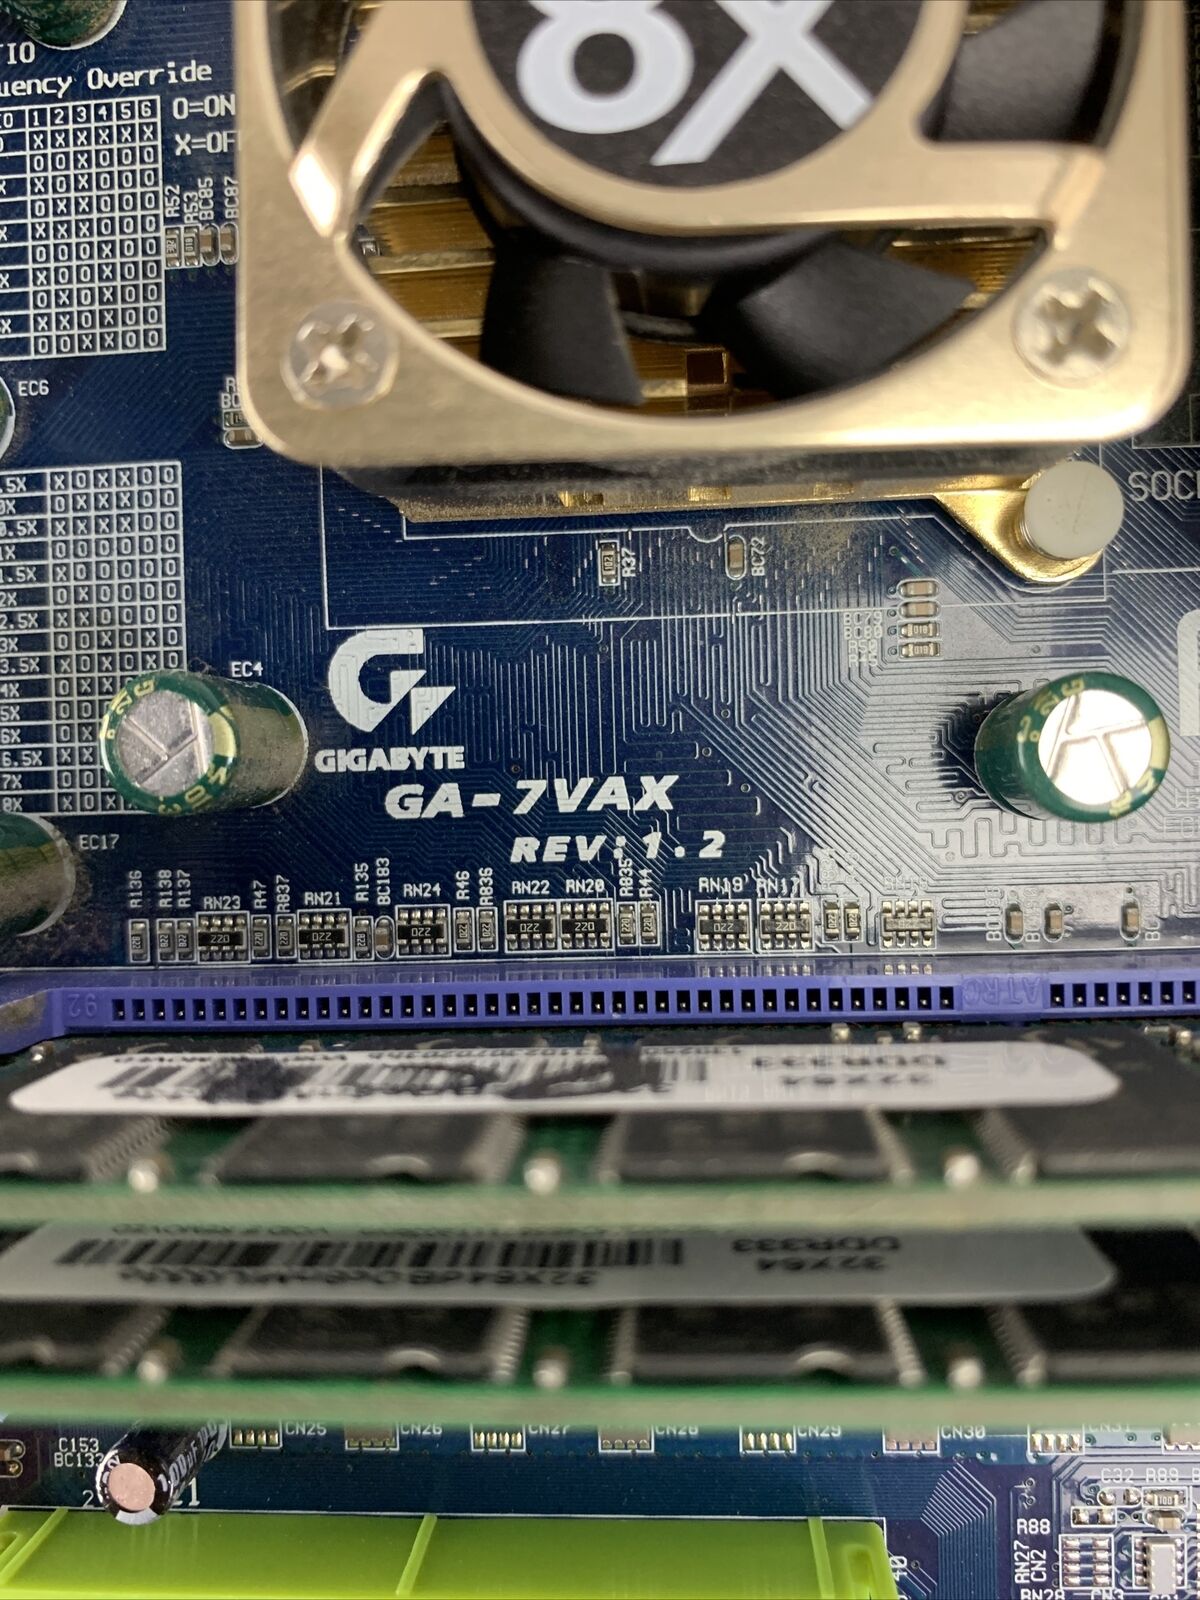 Gigabyte GA-7VAX MB AMD Athlon XP 2000+ 1.66GHz 256MB RAM w/shield Bad Caps